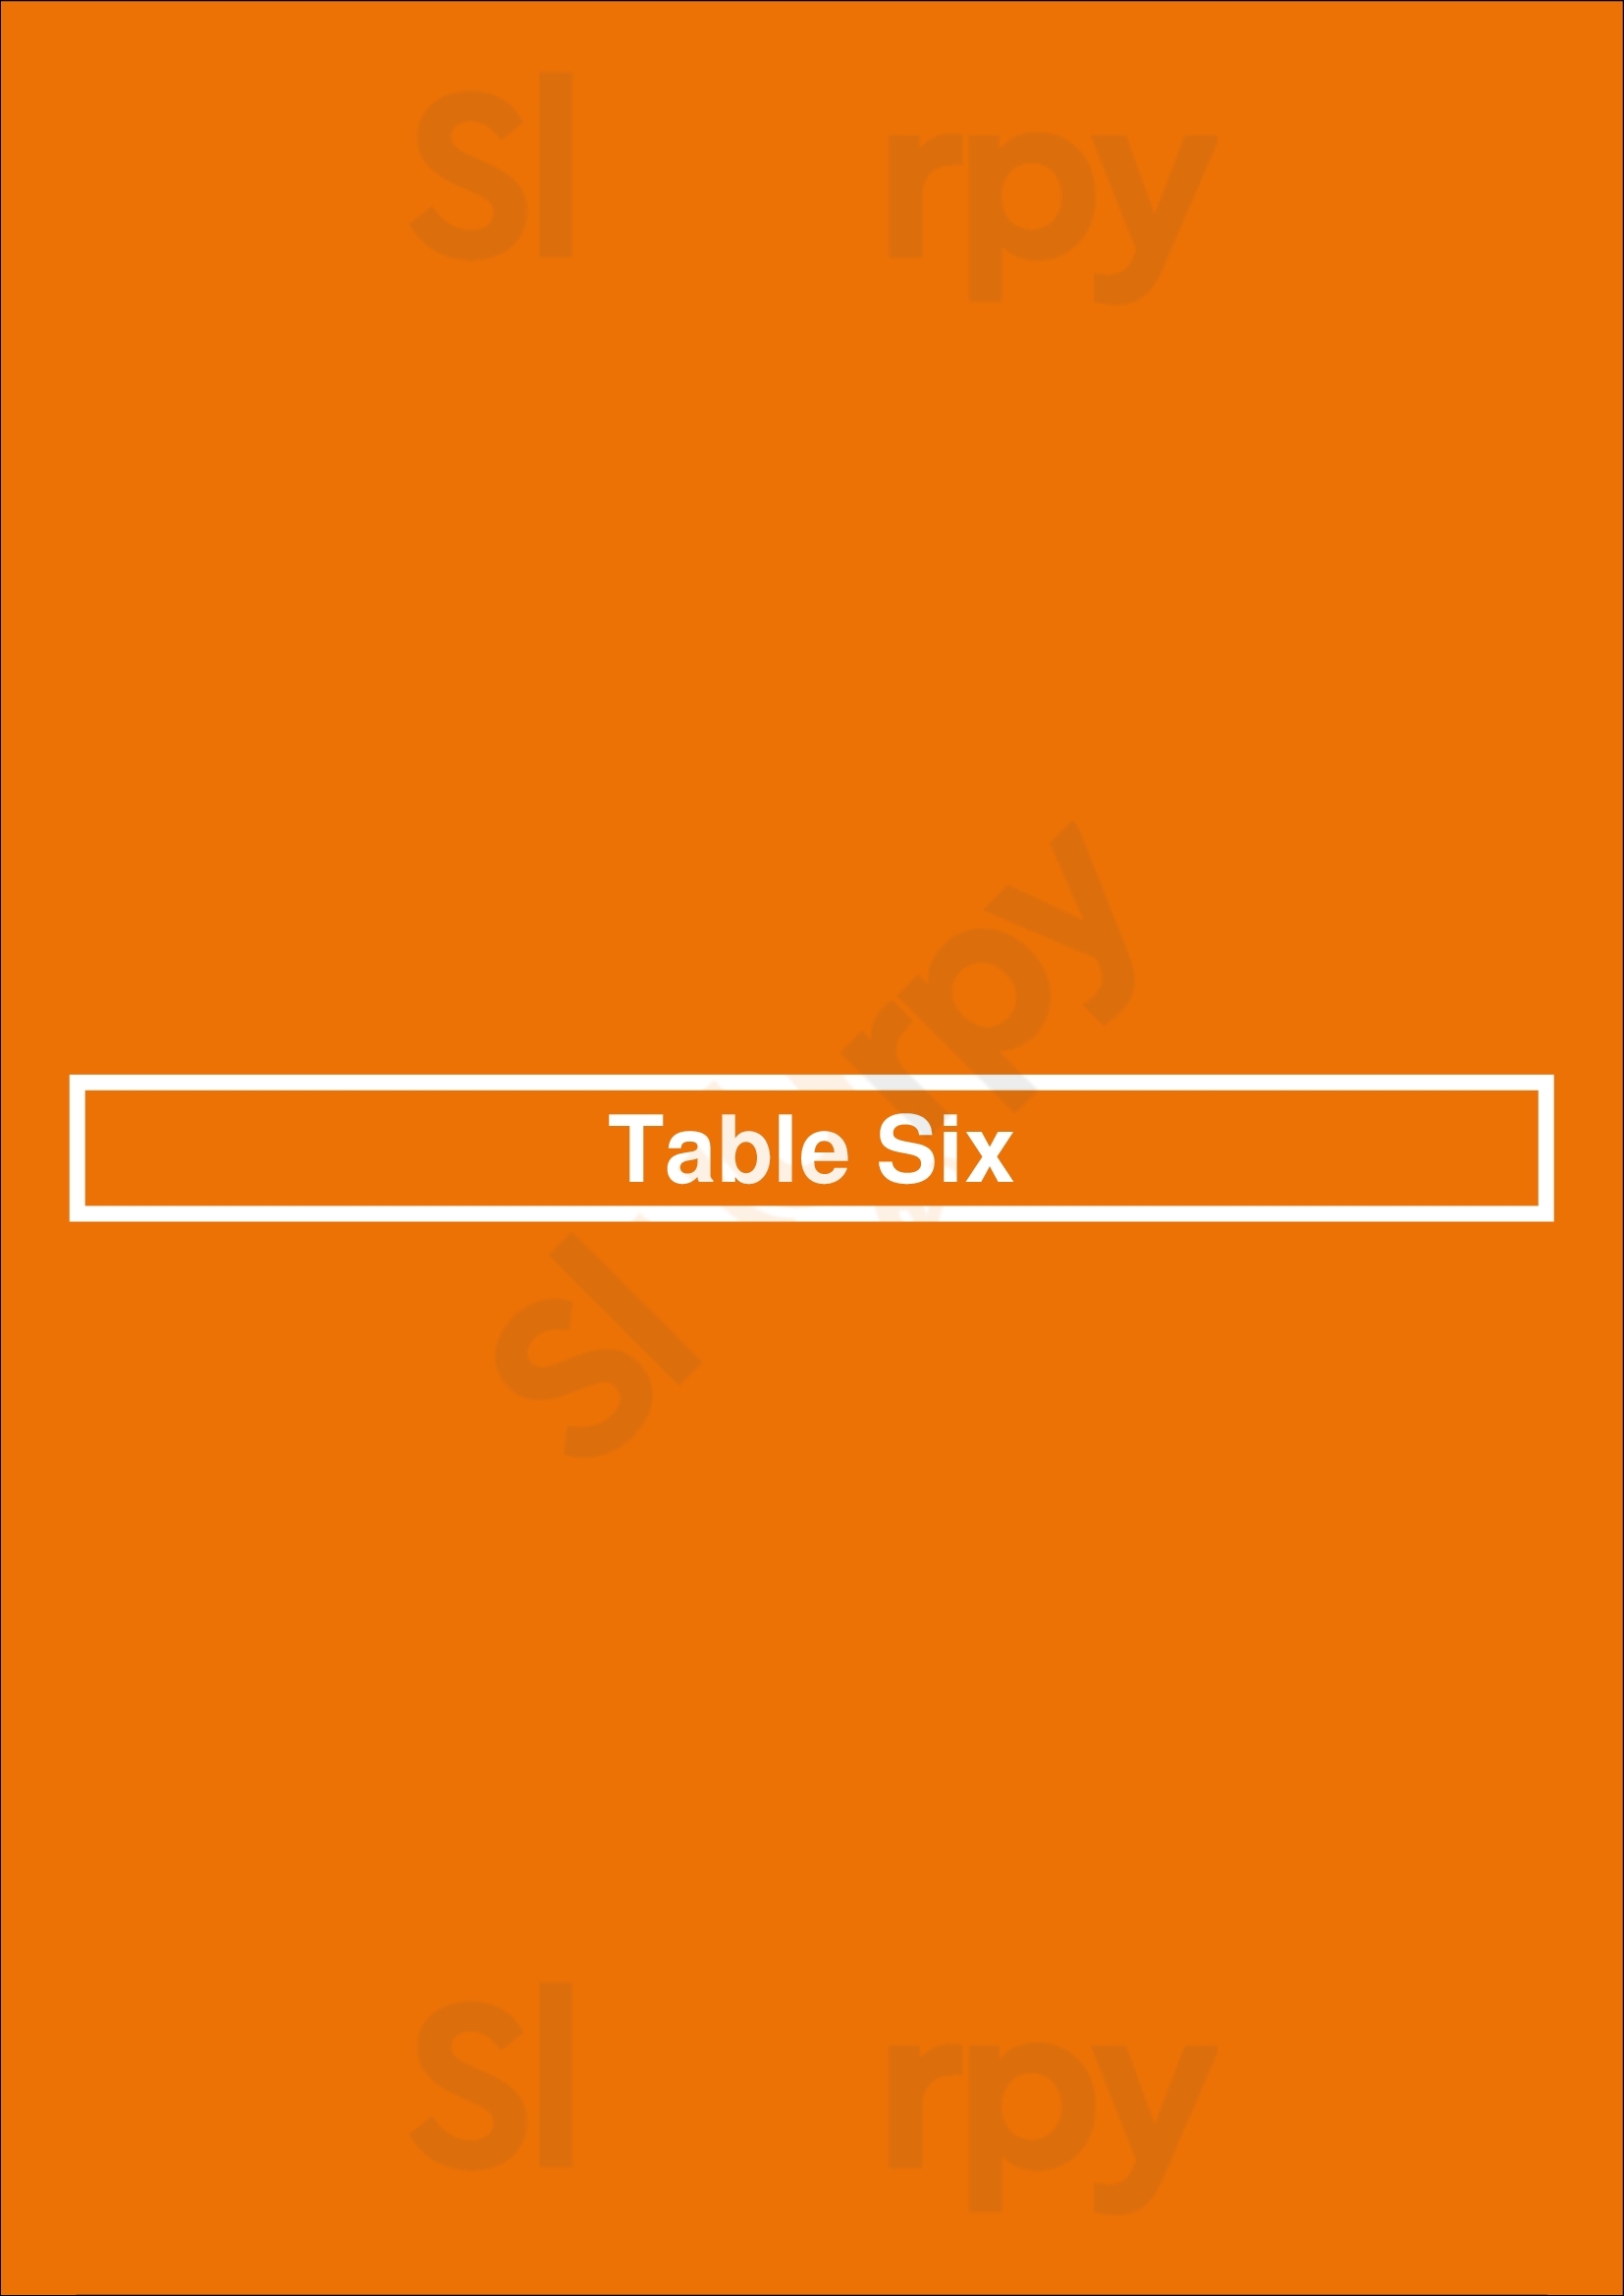 Table Six Denver Menu - 1